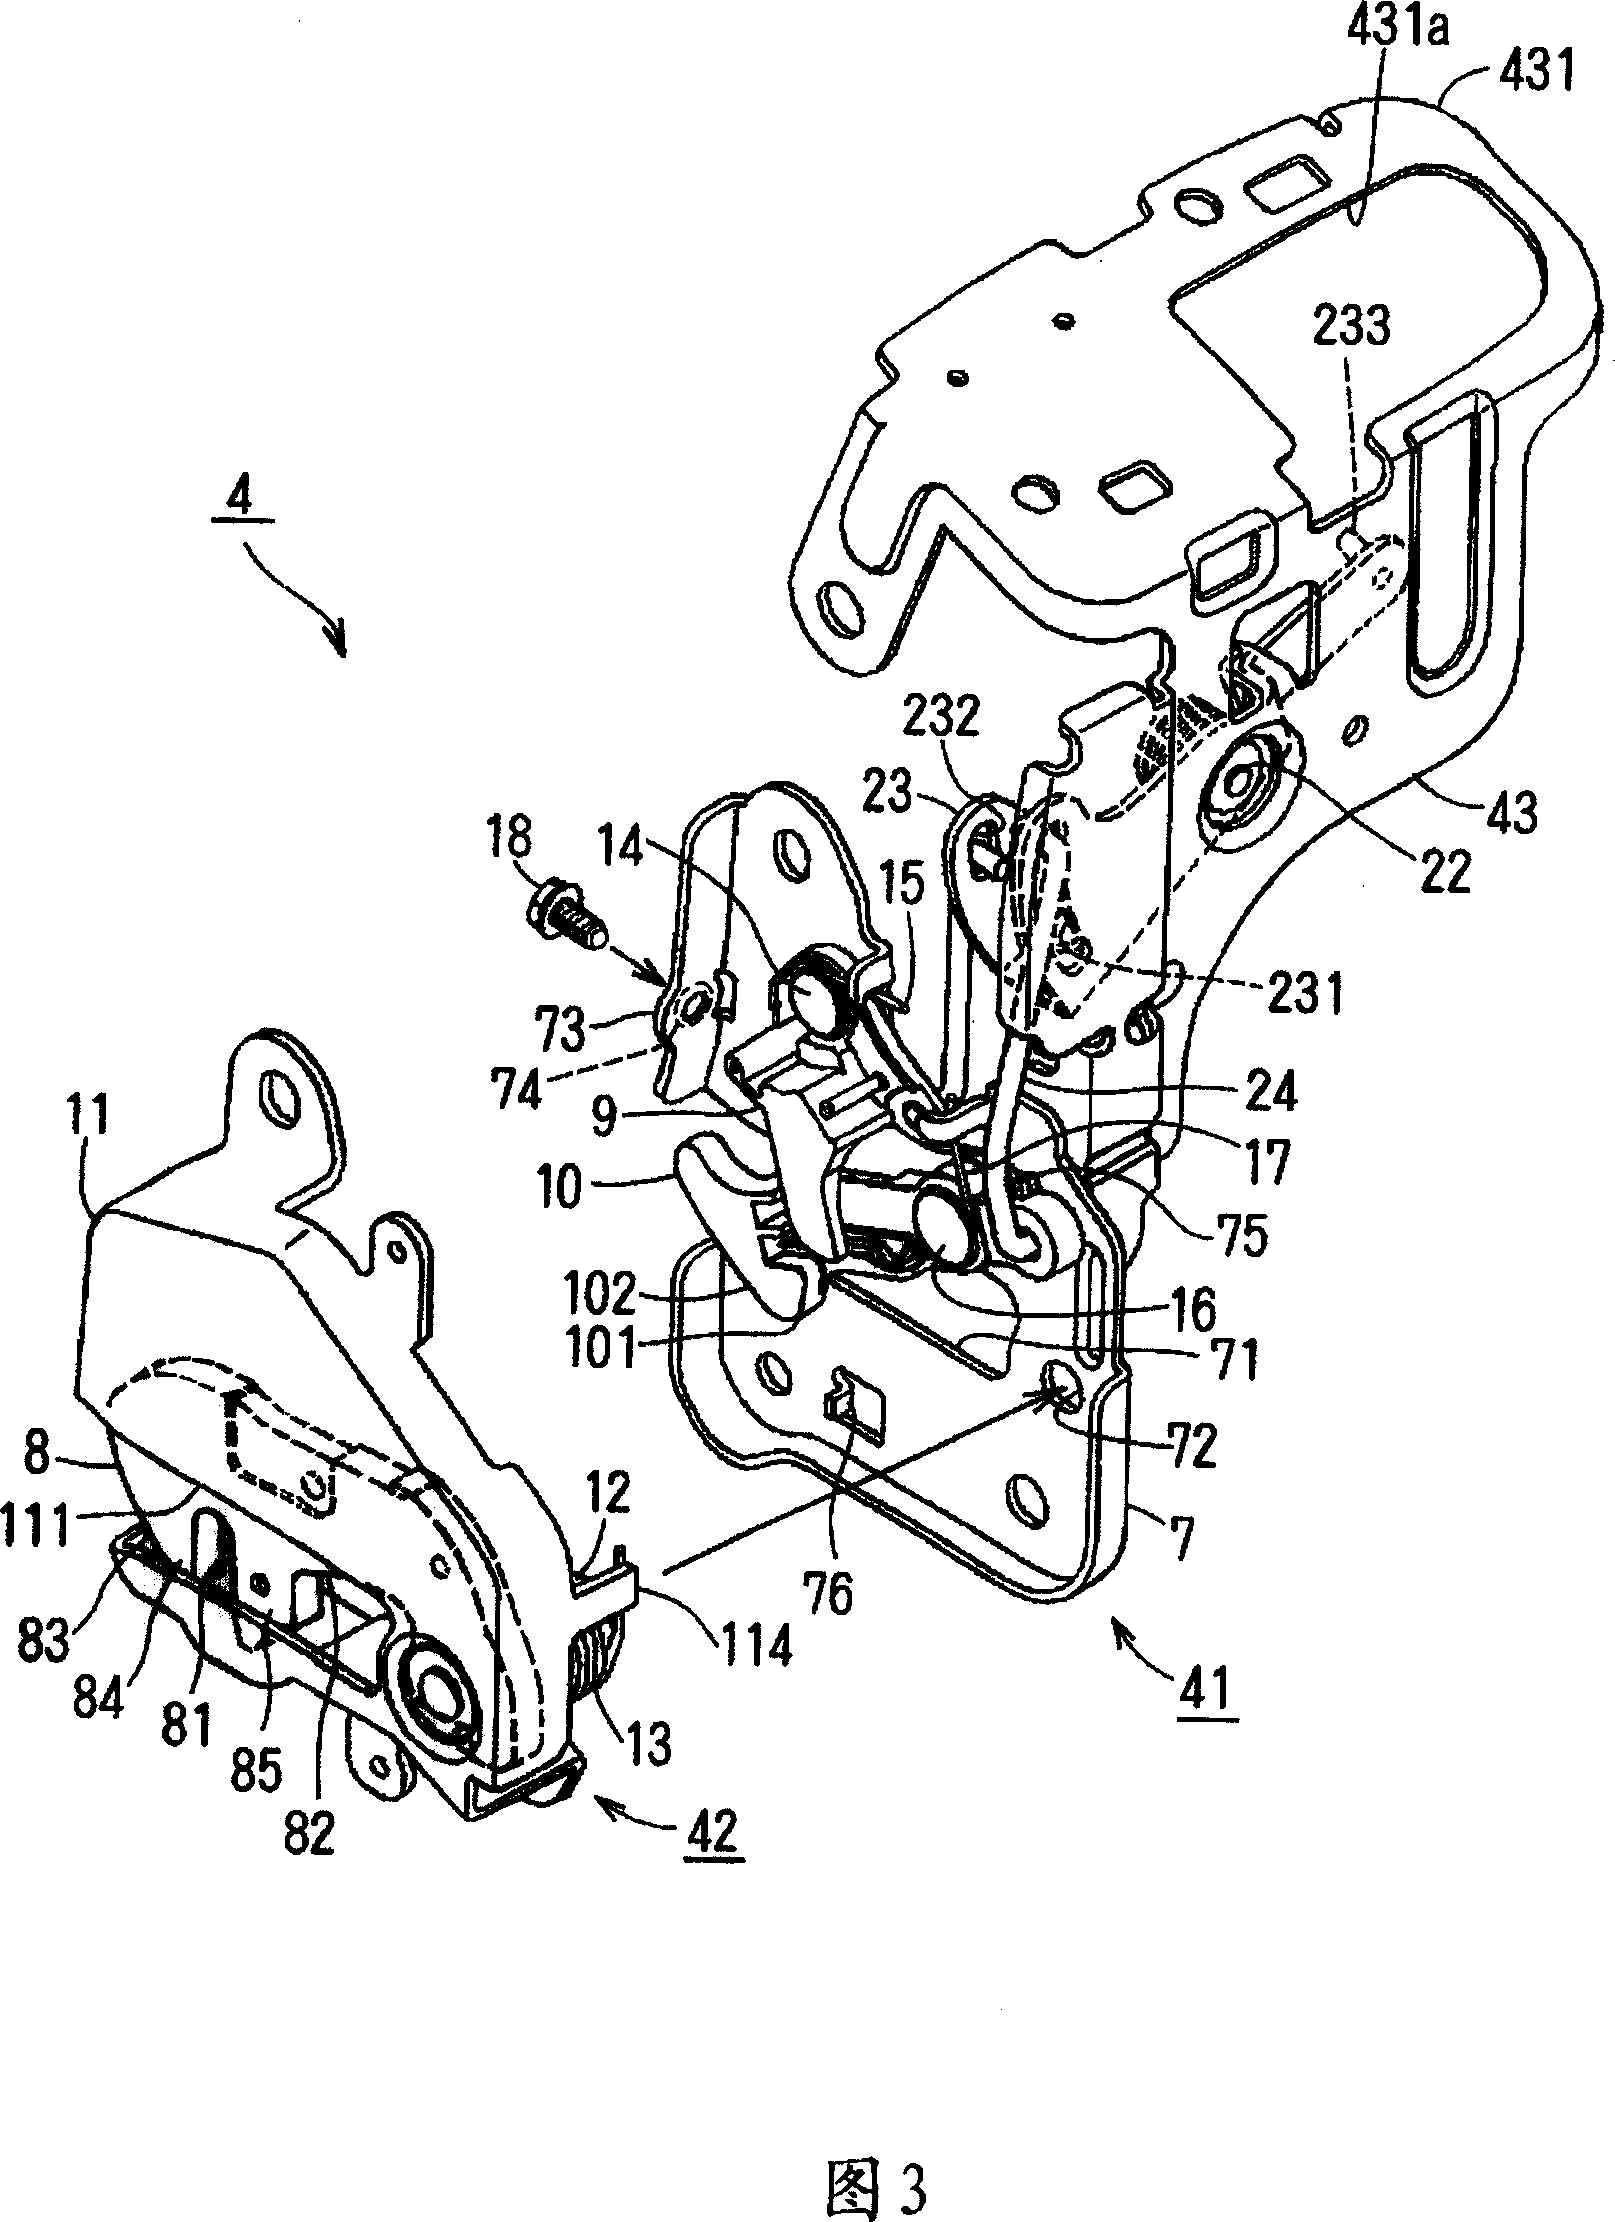 Vehicle seat lock